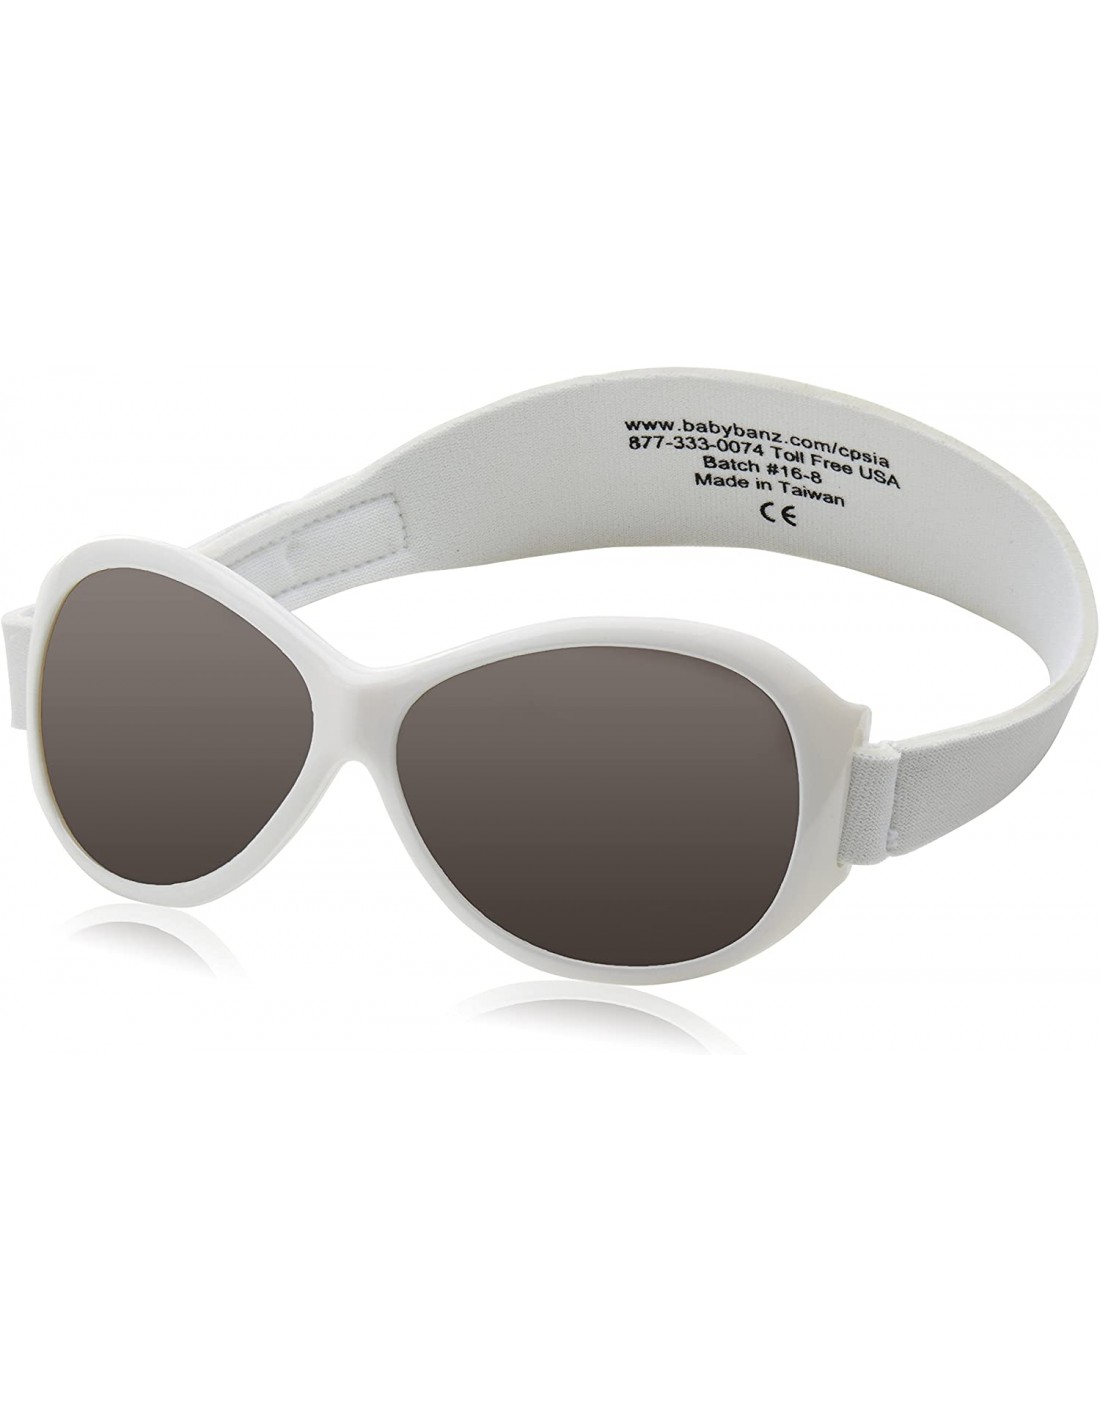 Ochelari Bebe - 2 ani Retro Oval White (alb)